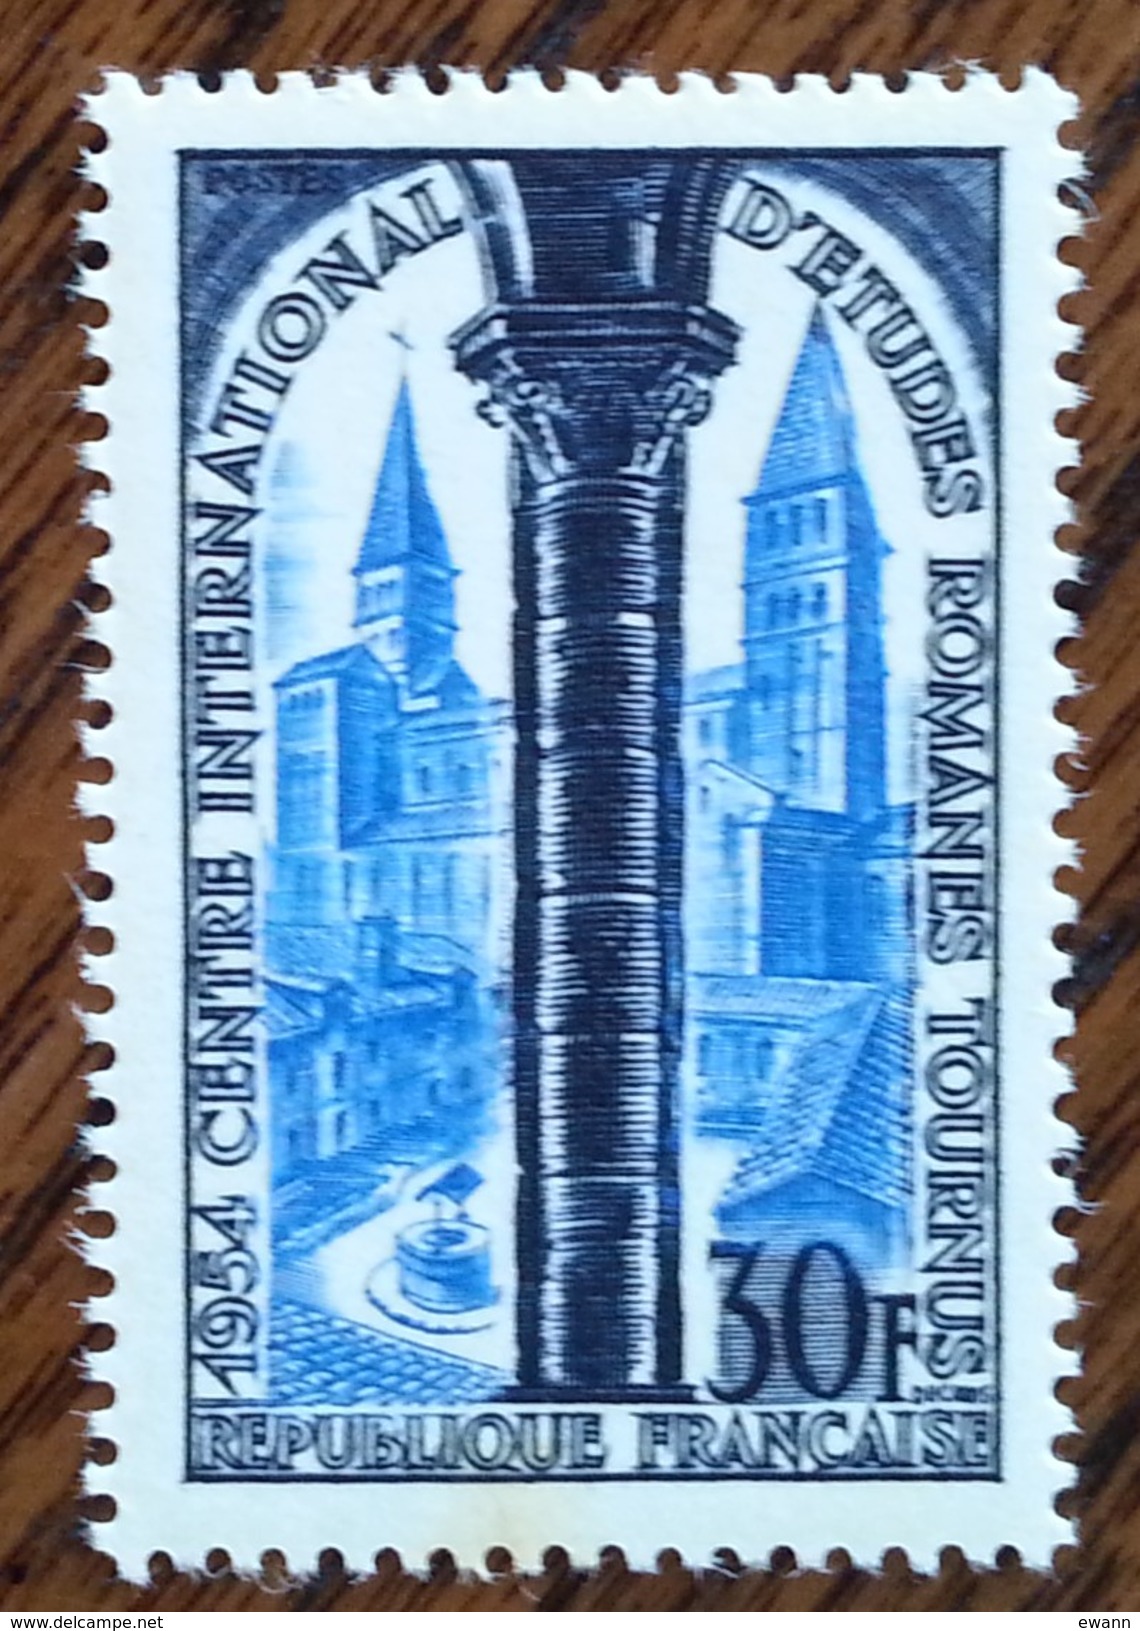 France - YT N°986 - Centre International D'études Romanes - 1954 - Neuf - Unused Stamps